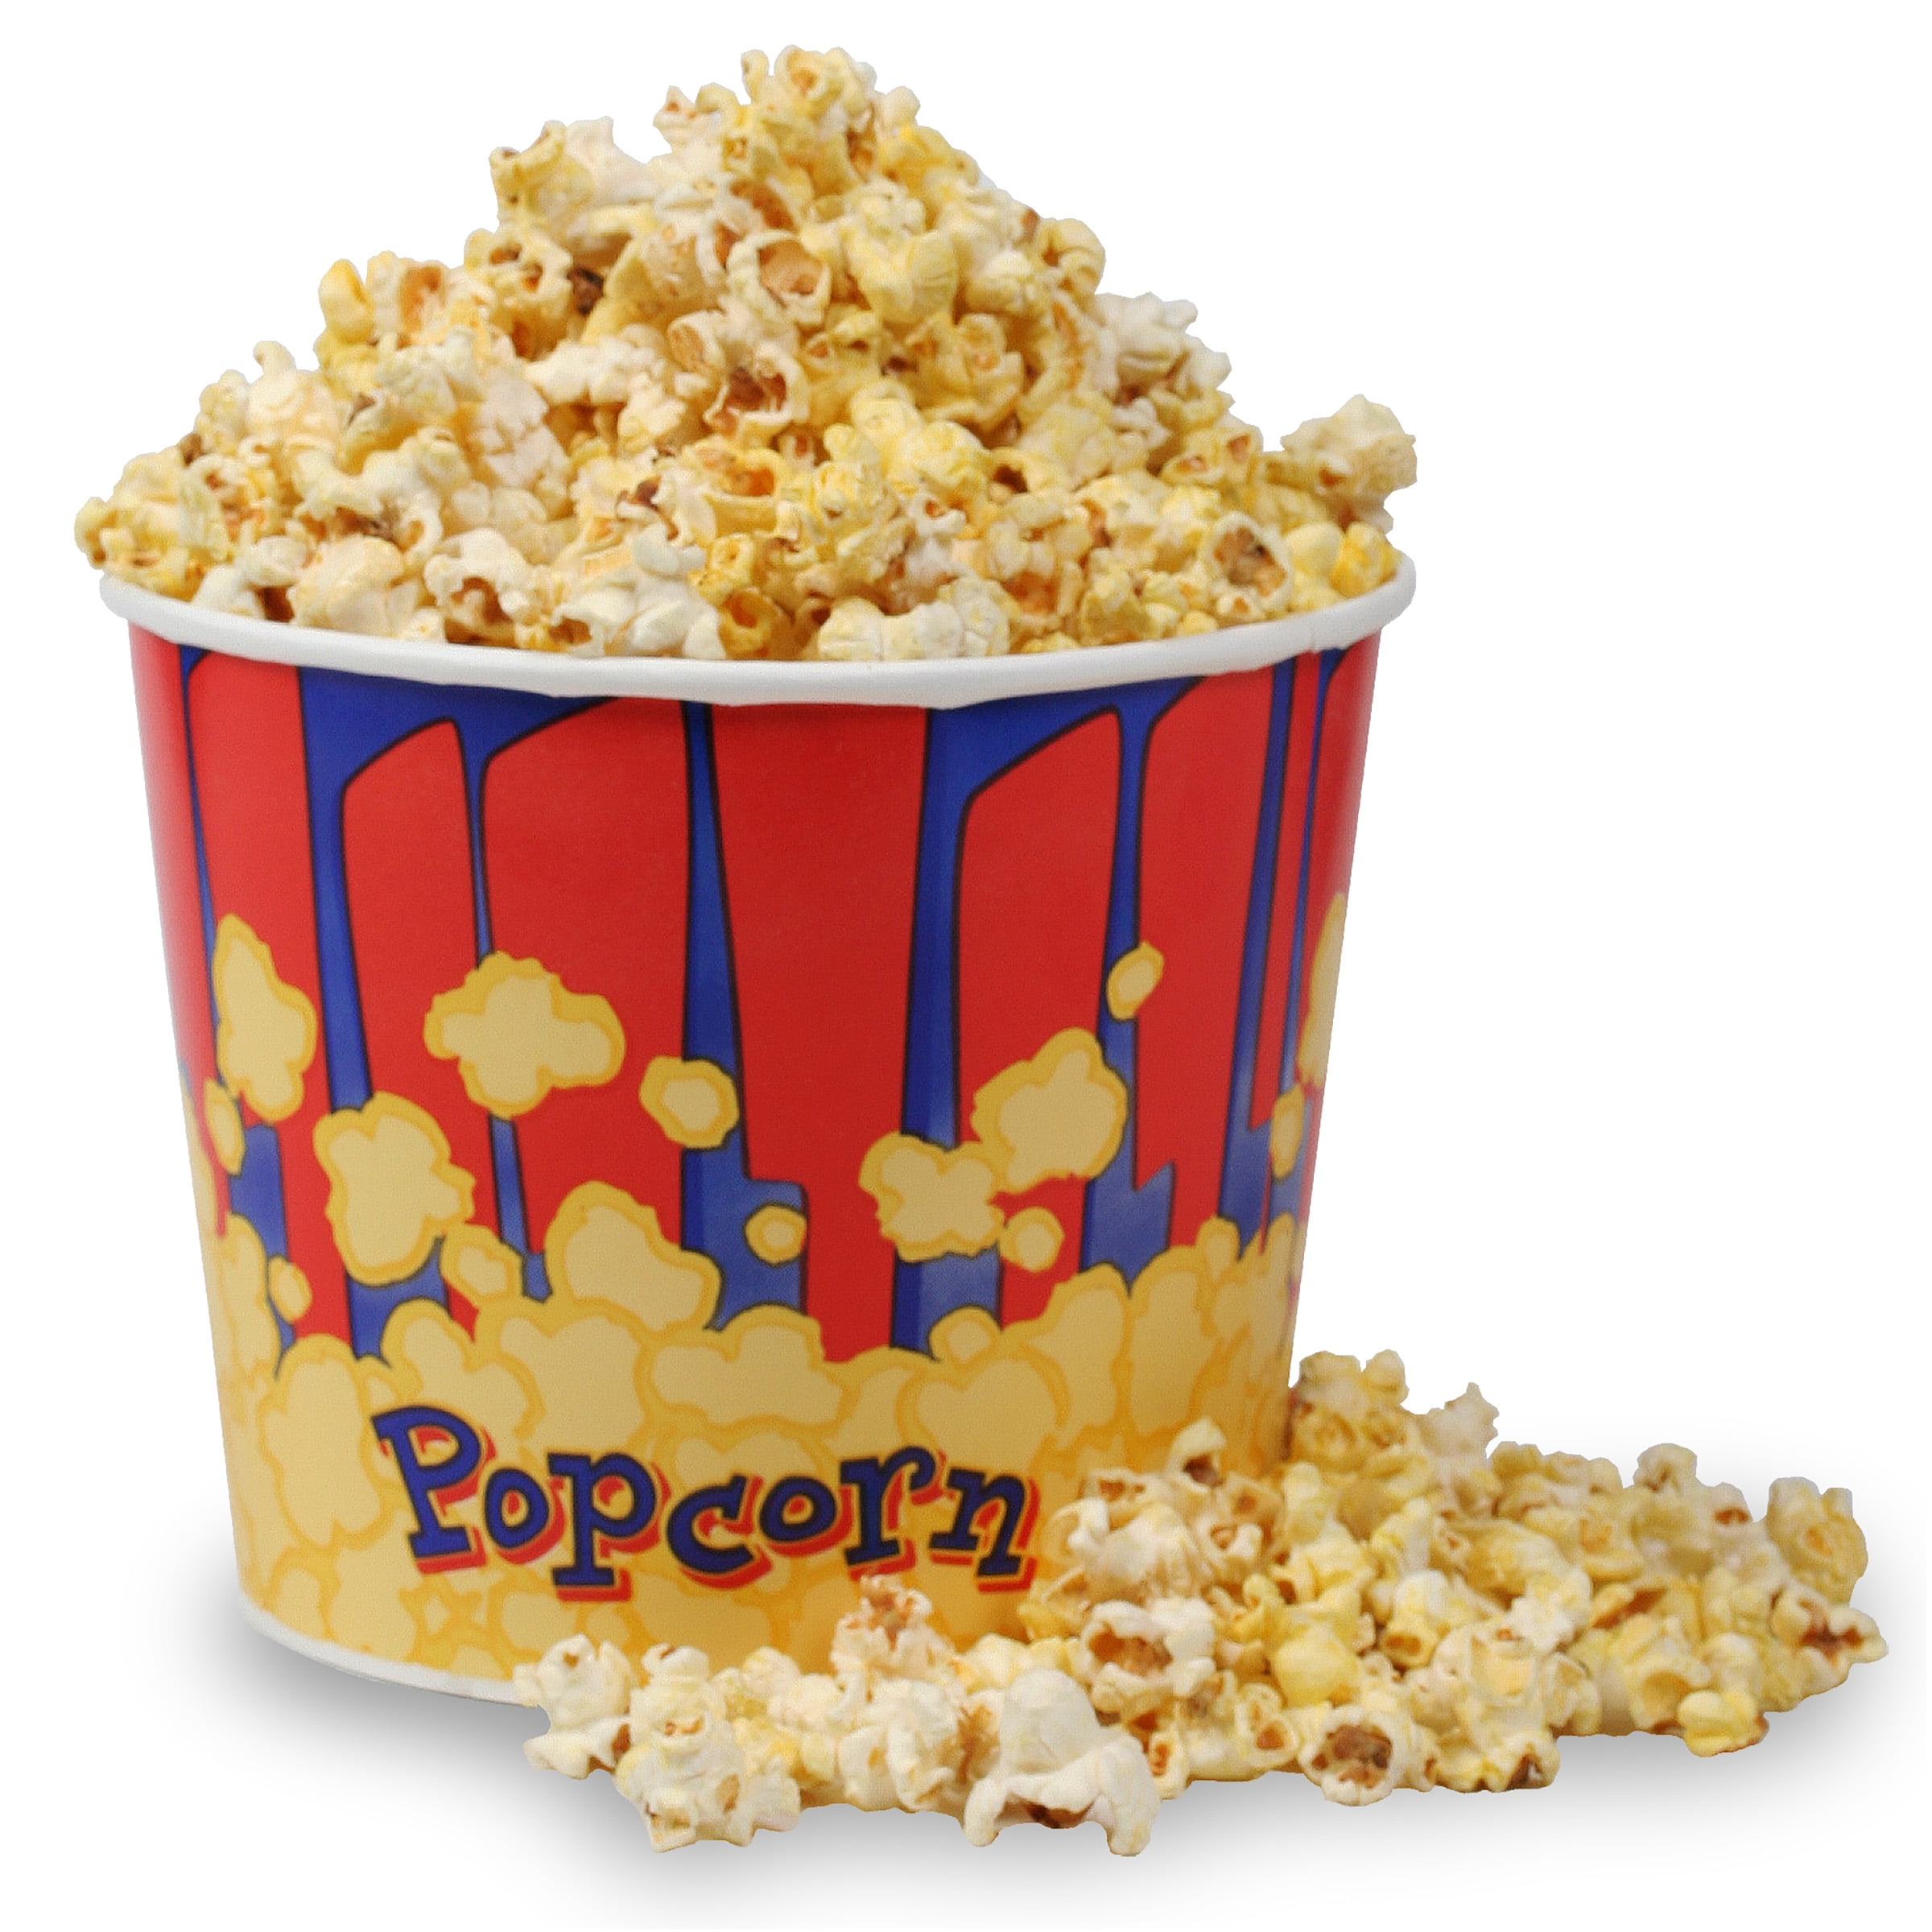 25-movie-theater-popcorn-bucket-85-oz-by-great-northern-popcorn